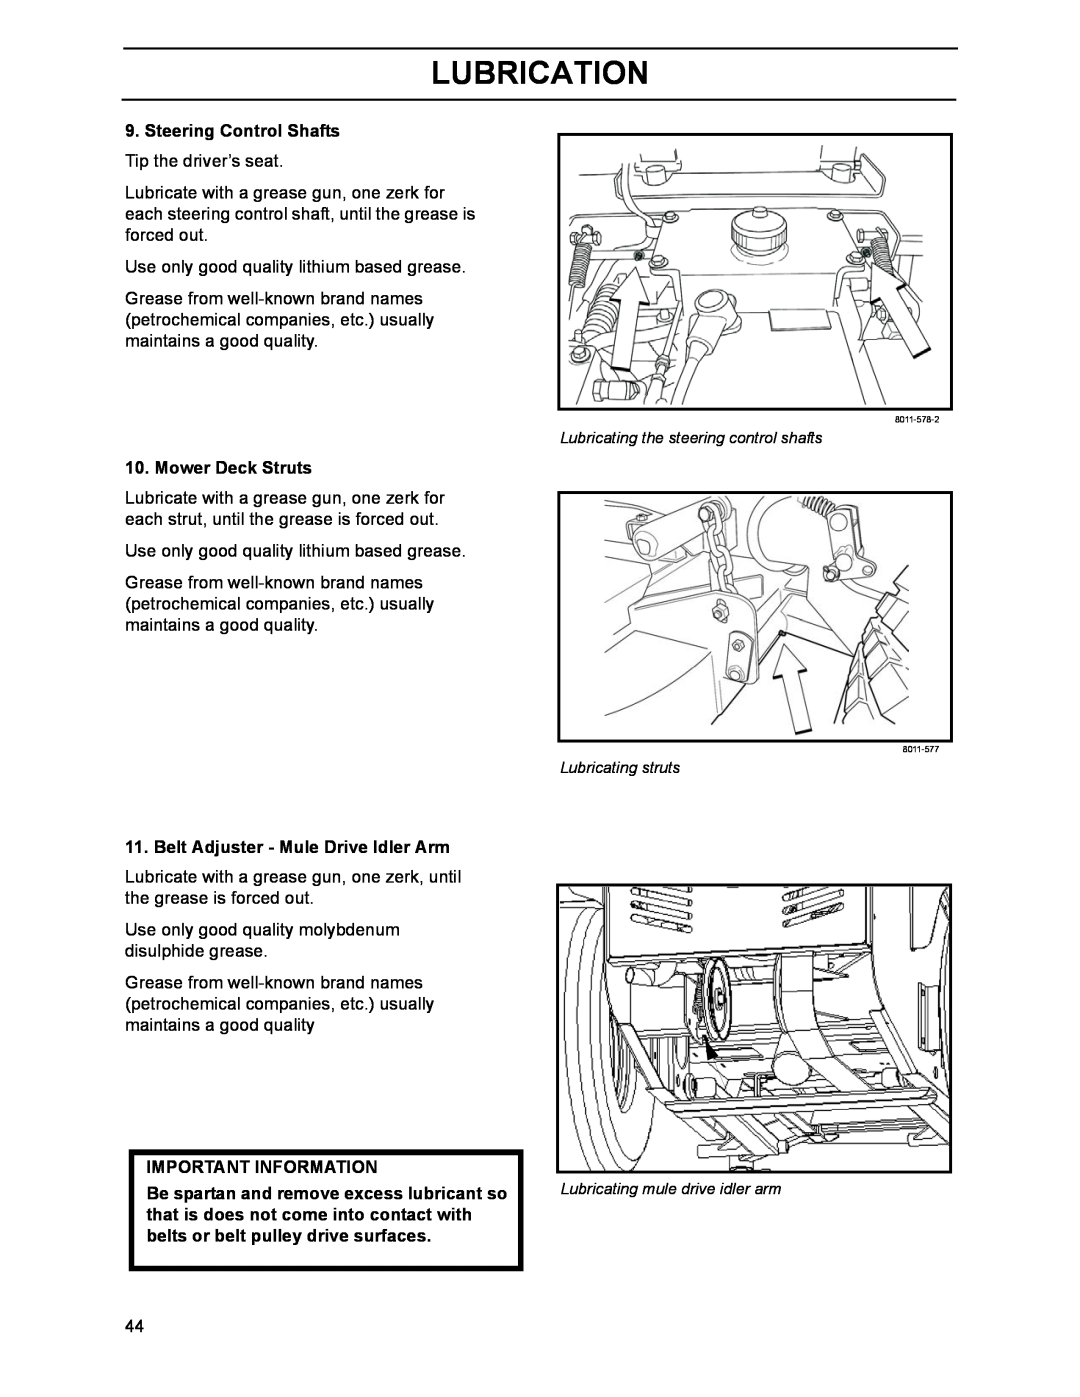 Husqvarna BZ6127D Lubrication, Steering Control Shafts Tip the driver’s seat, Mower Deck Struts, Important Information 